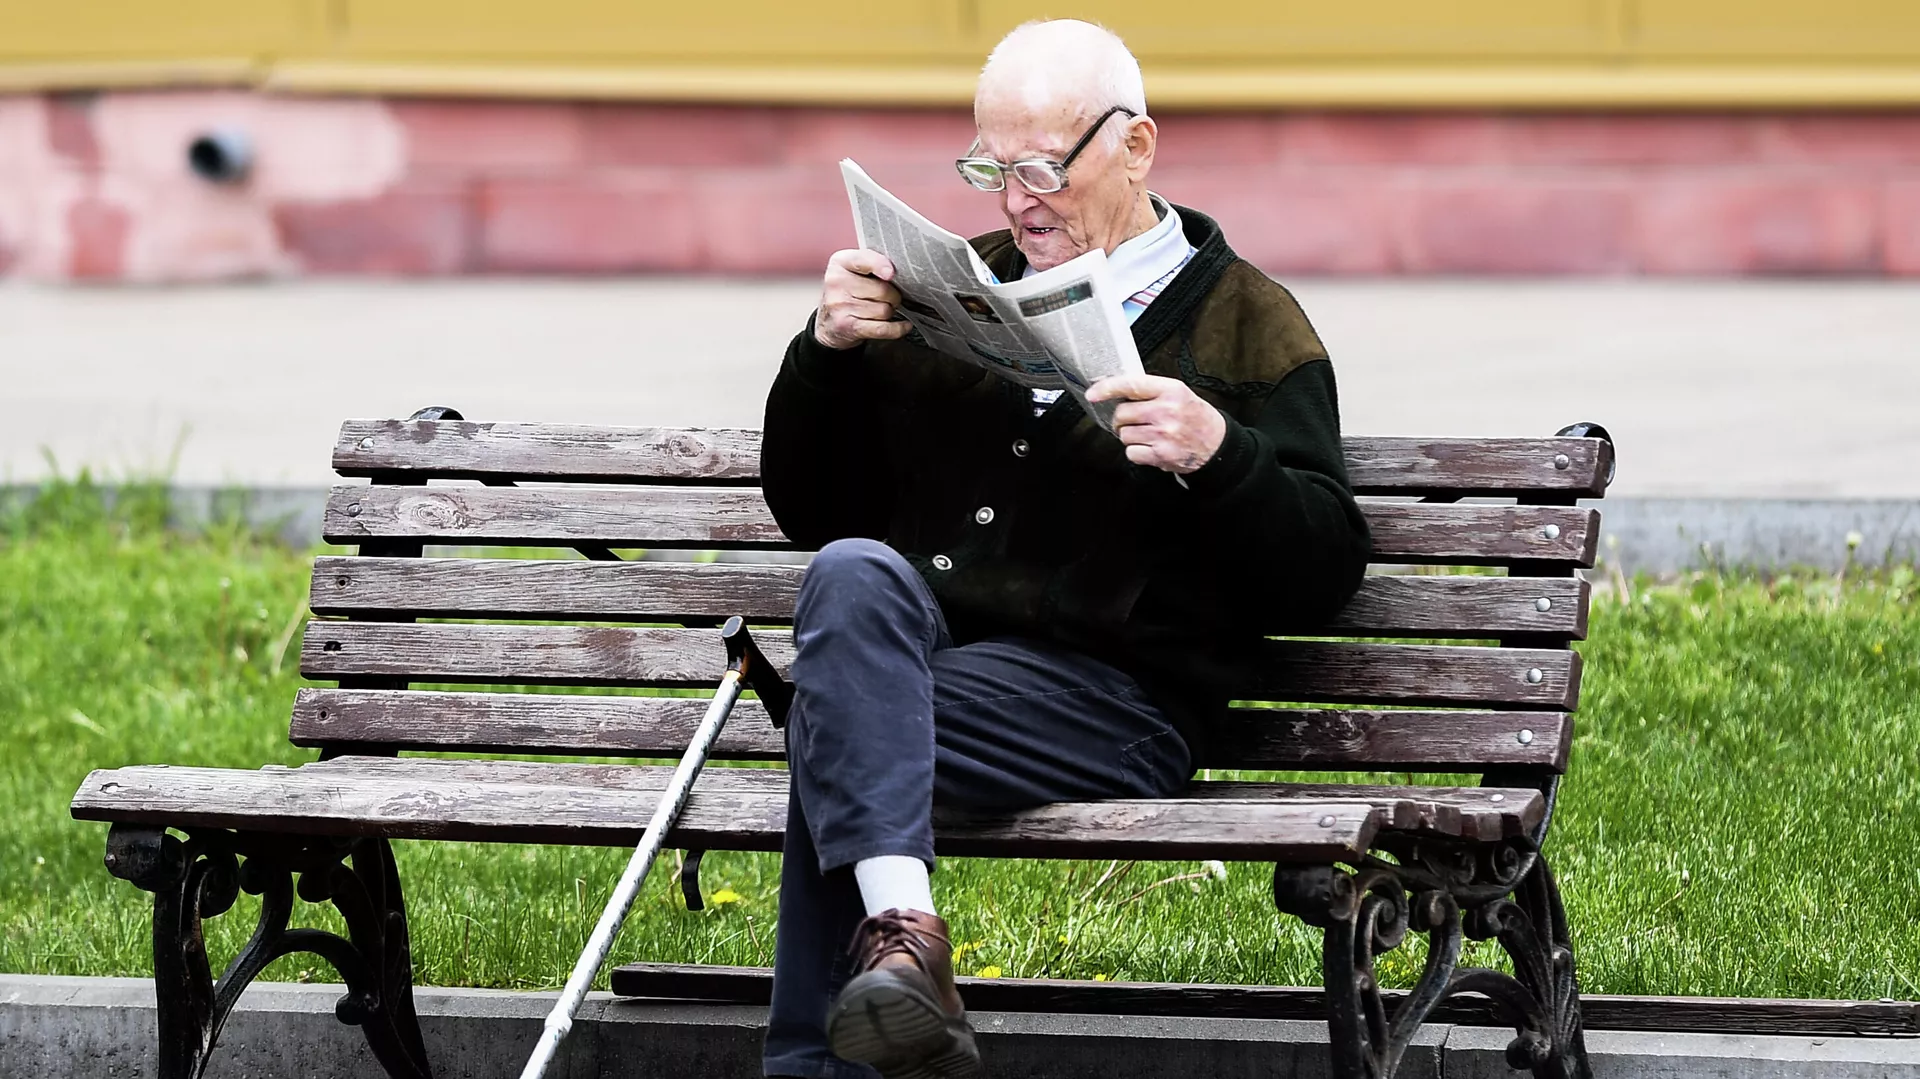 Мужчина читает газету на улице на лавочке в Москве - РИА Новости, 1920, 20.08.2020